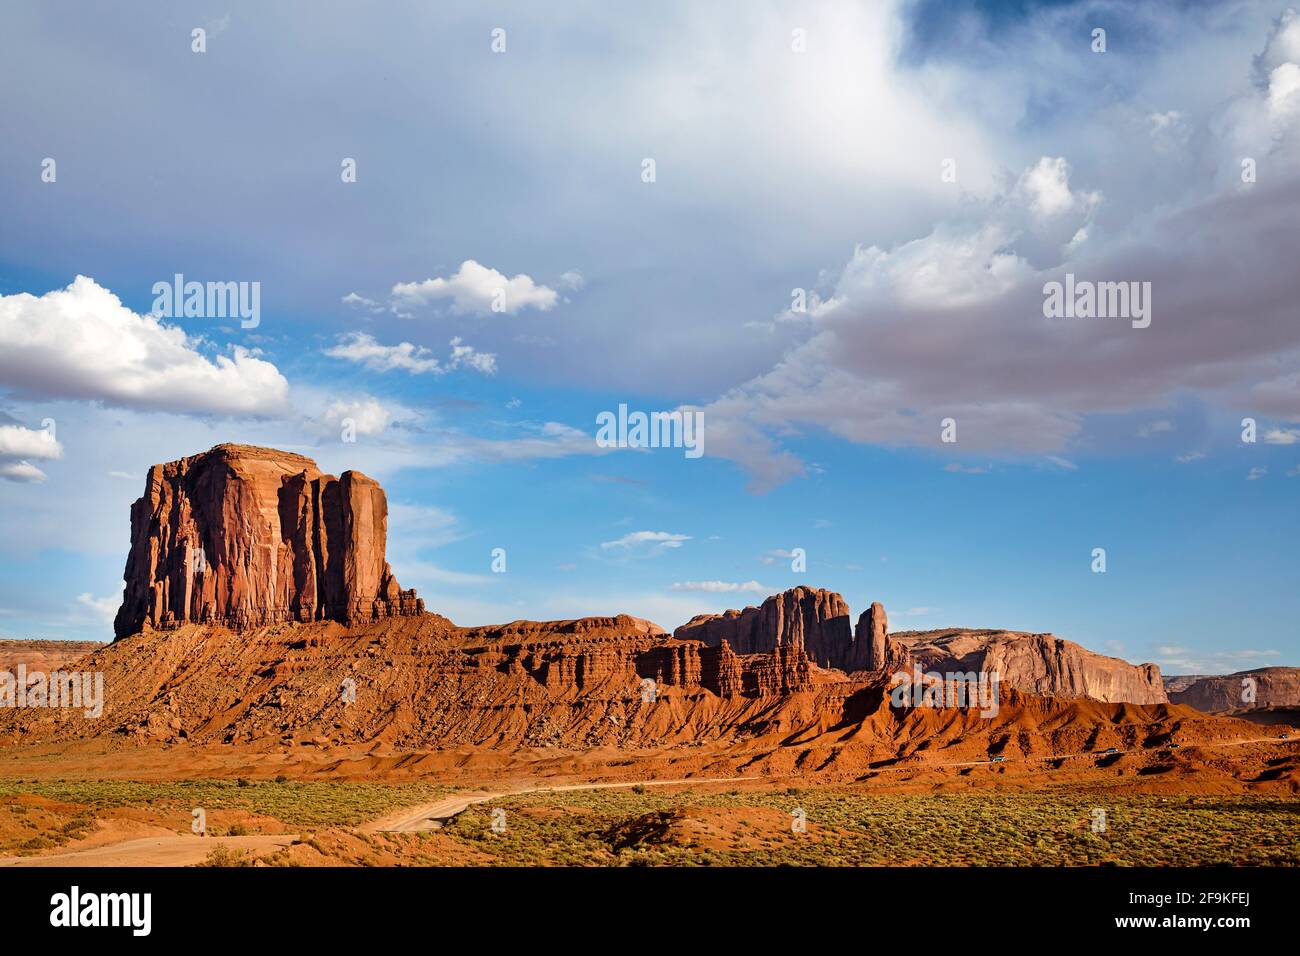 Monument Valley. Navajo Nation. Elefantenbutte Stockfoto